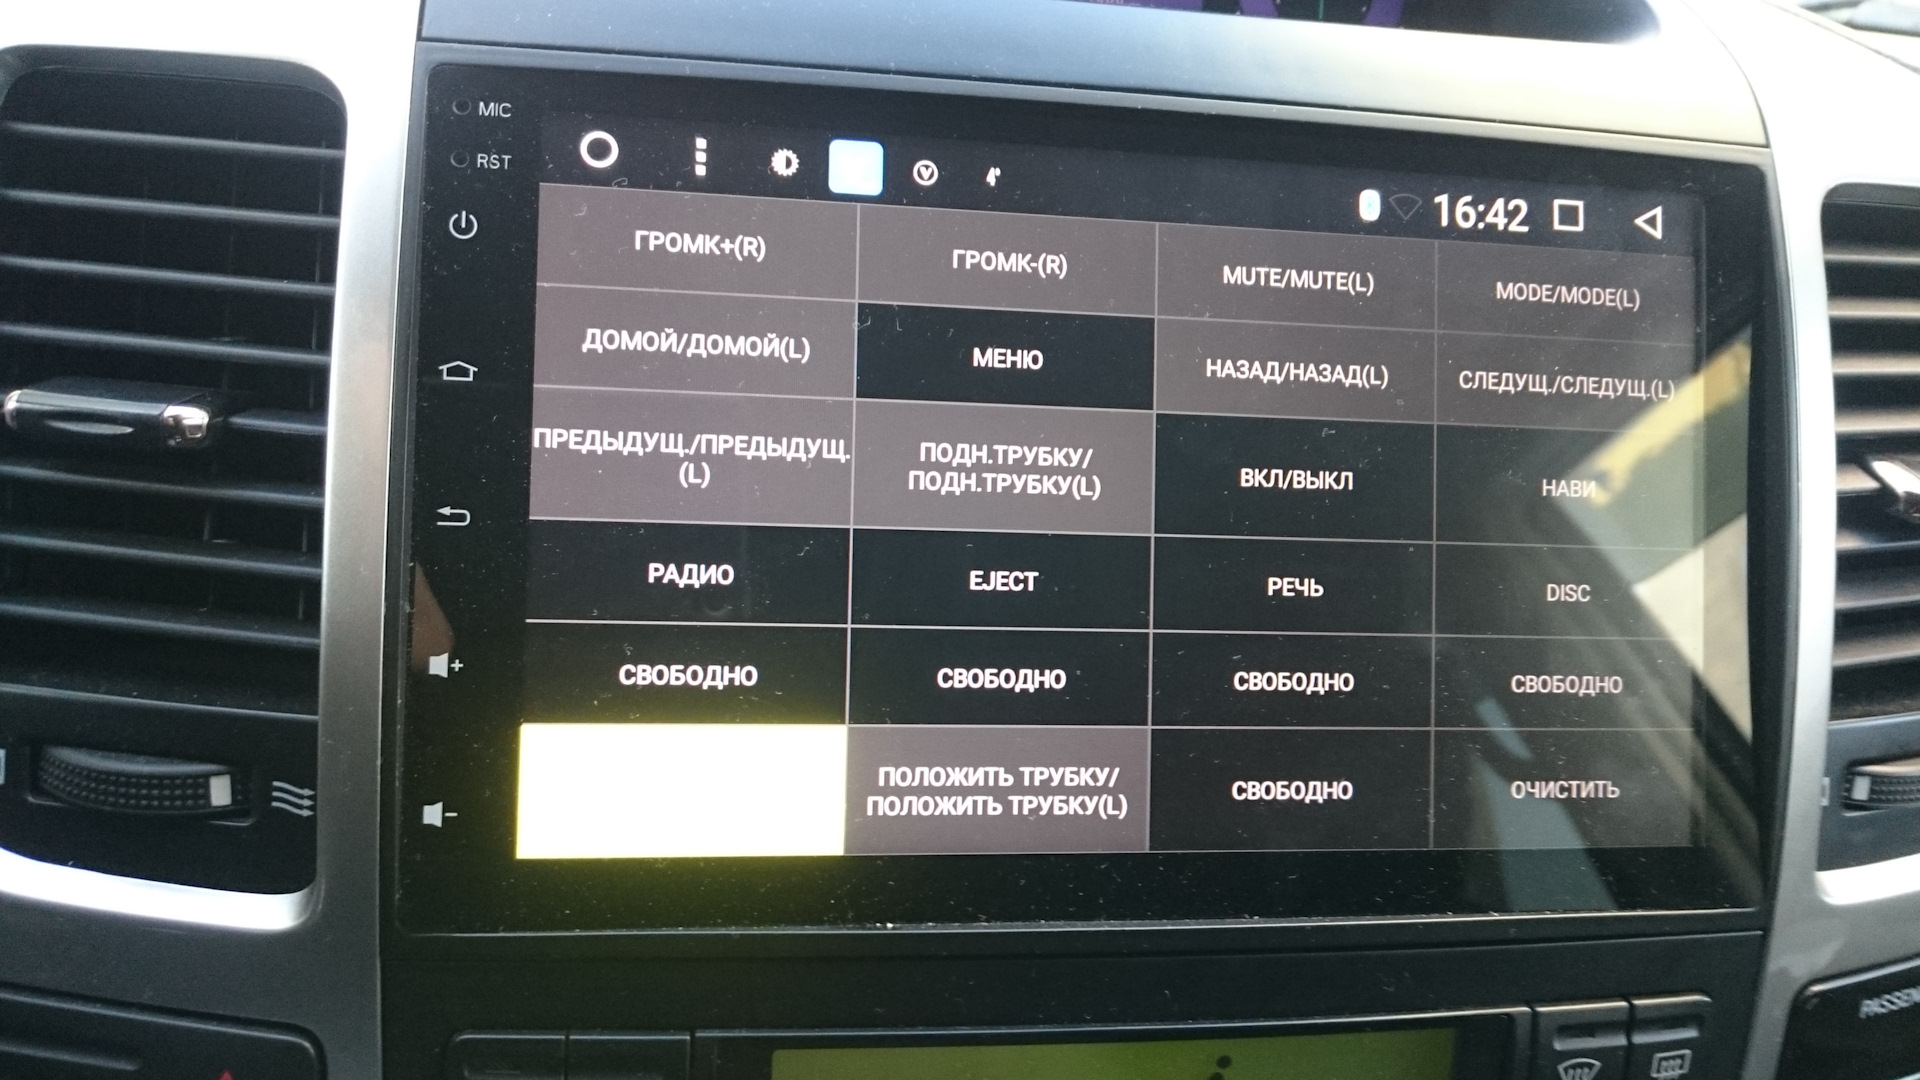 Как настроить телефон на магнитолу. Toyota Land Cruiser Prado 120 Android. Тойота Прадо 120 магнитола андроид. Настройки кнопок на руле. Программирование кнопок на руле андроид магнитолы.